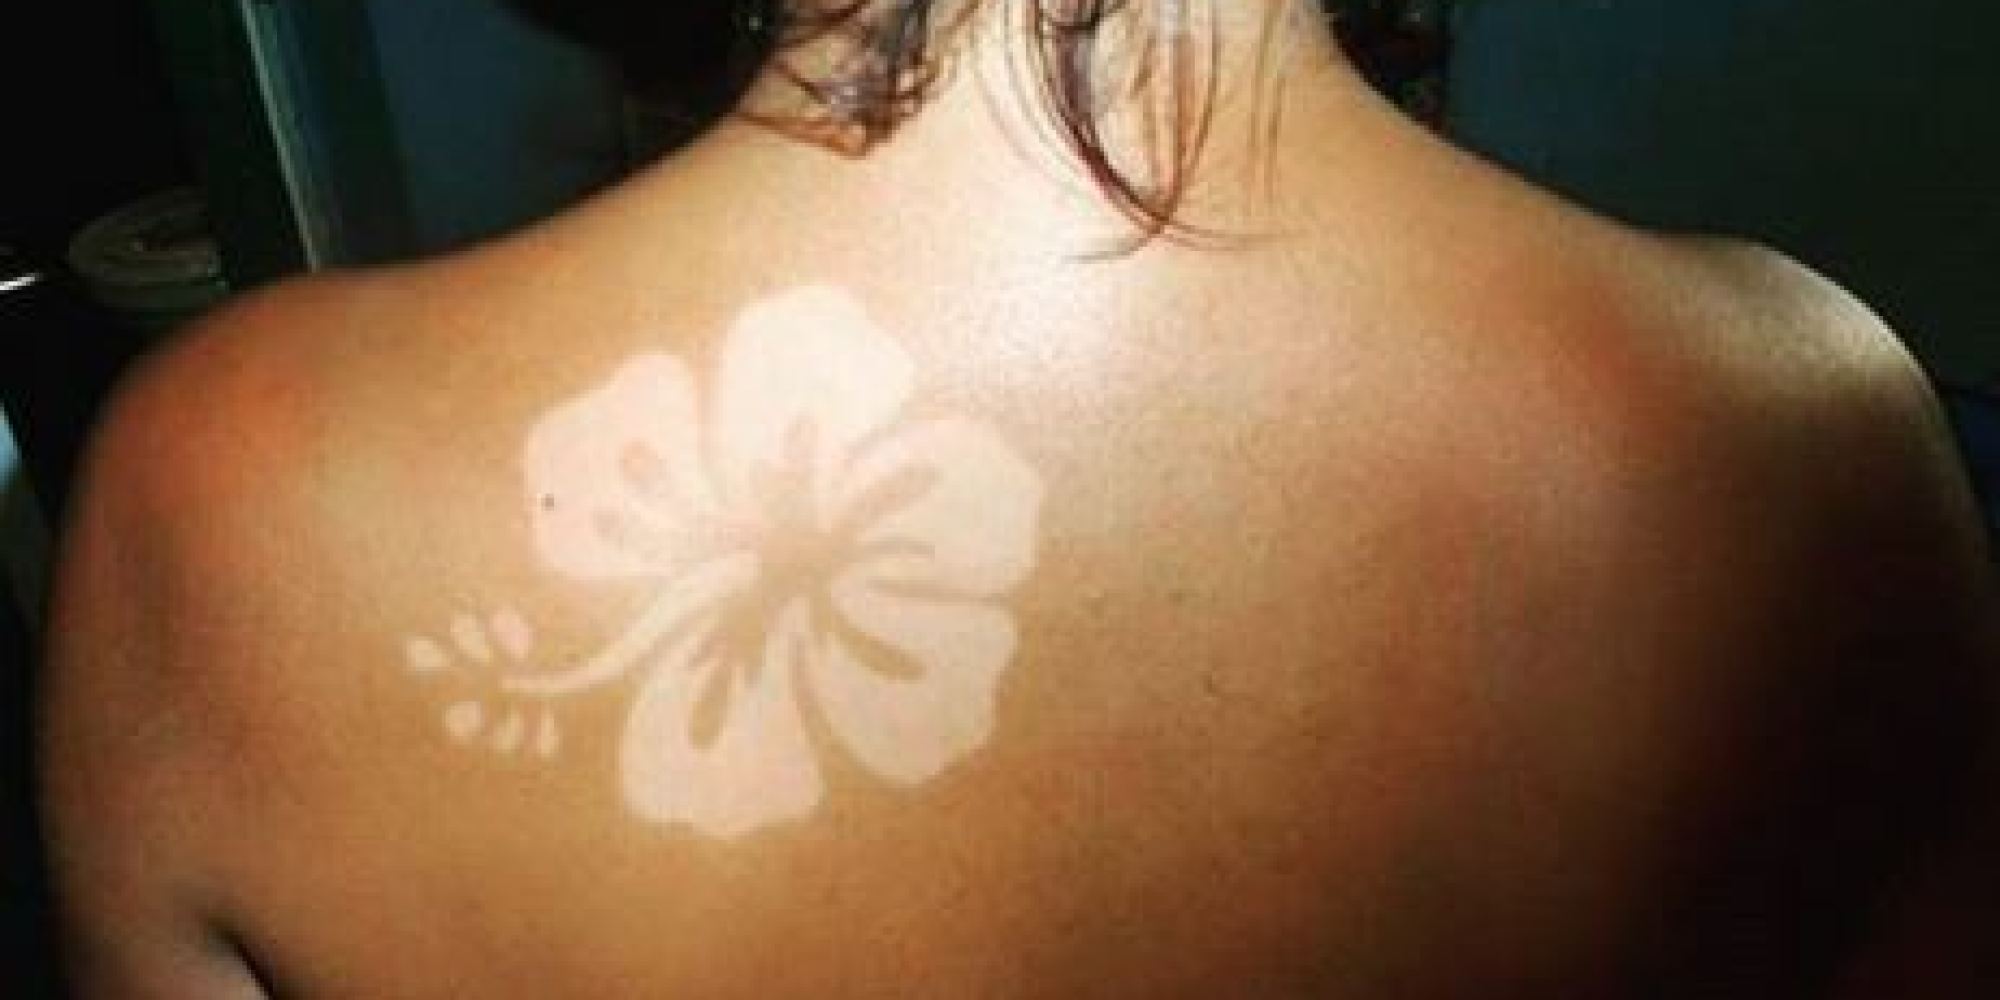 Tatuajes solares, una peligrosa forma de broncearse